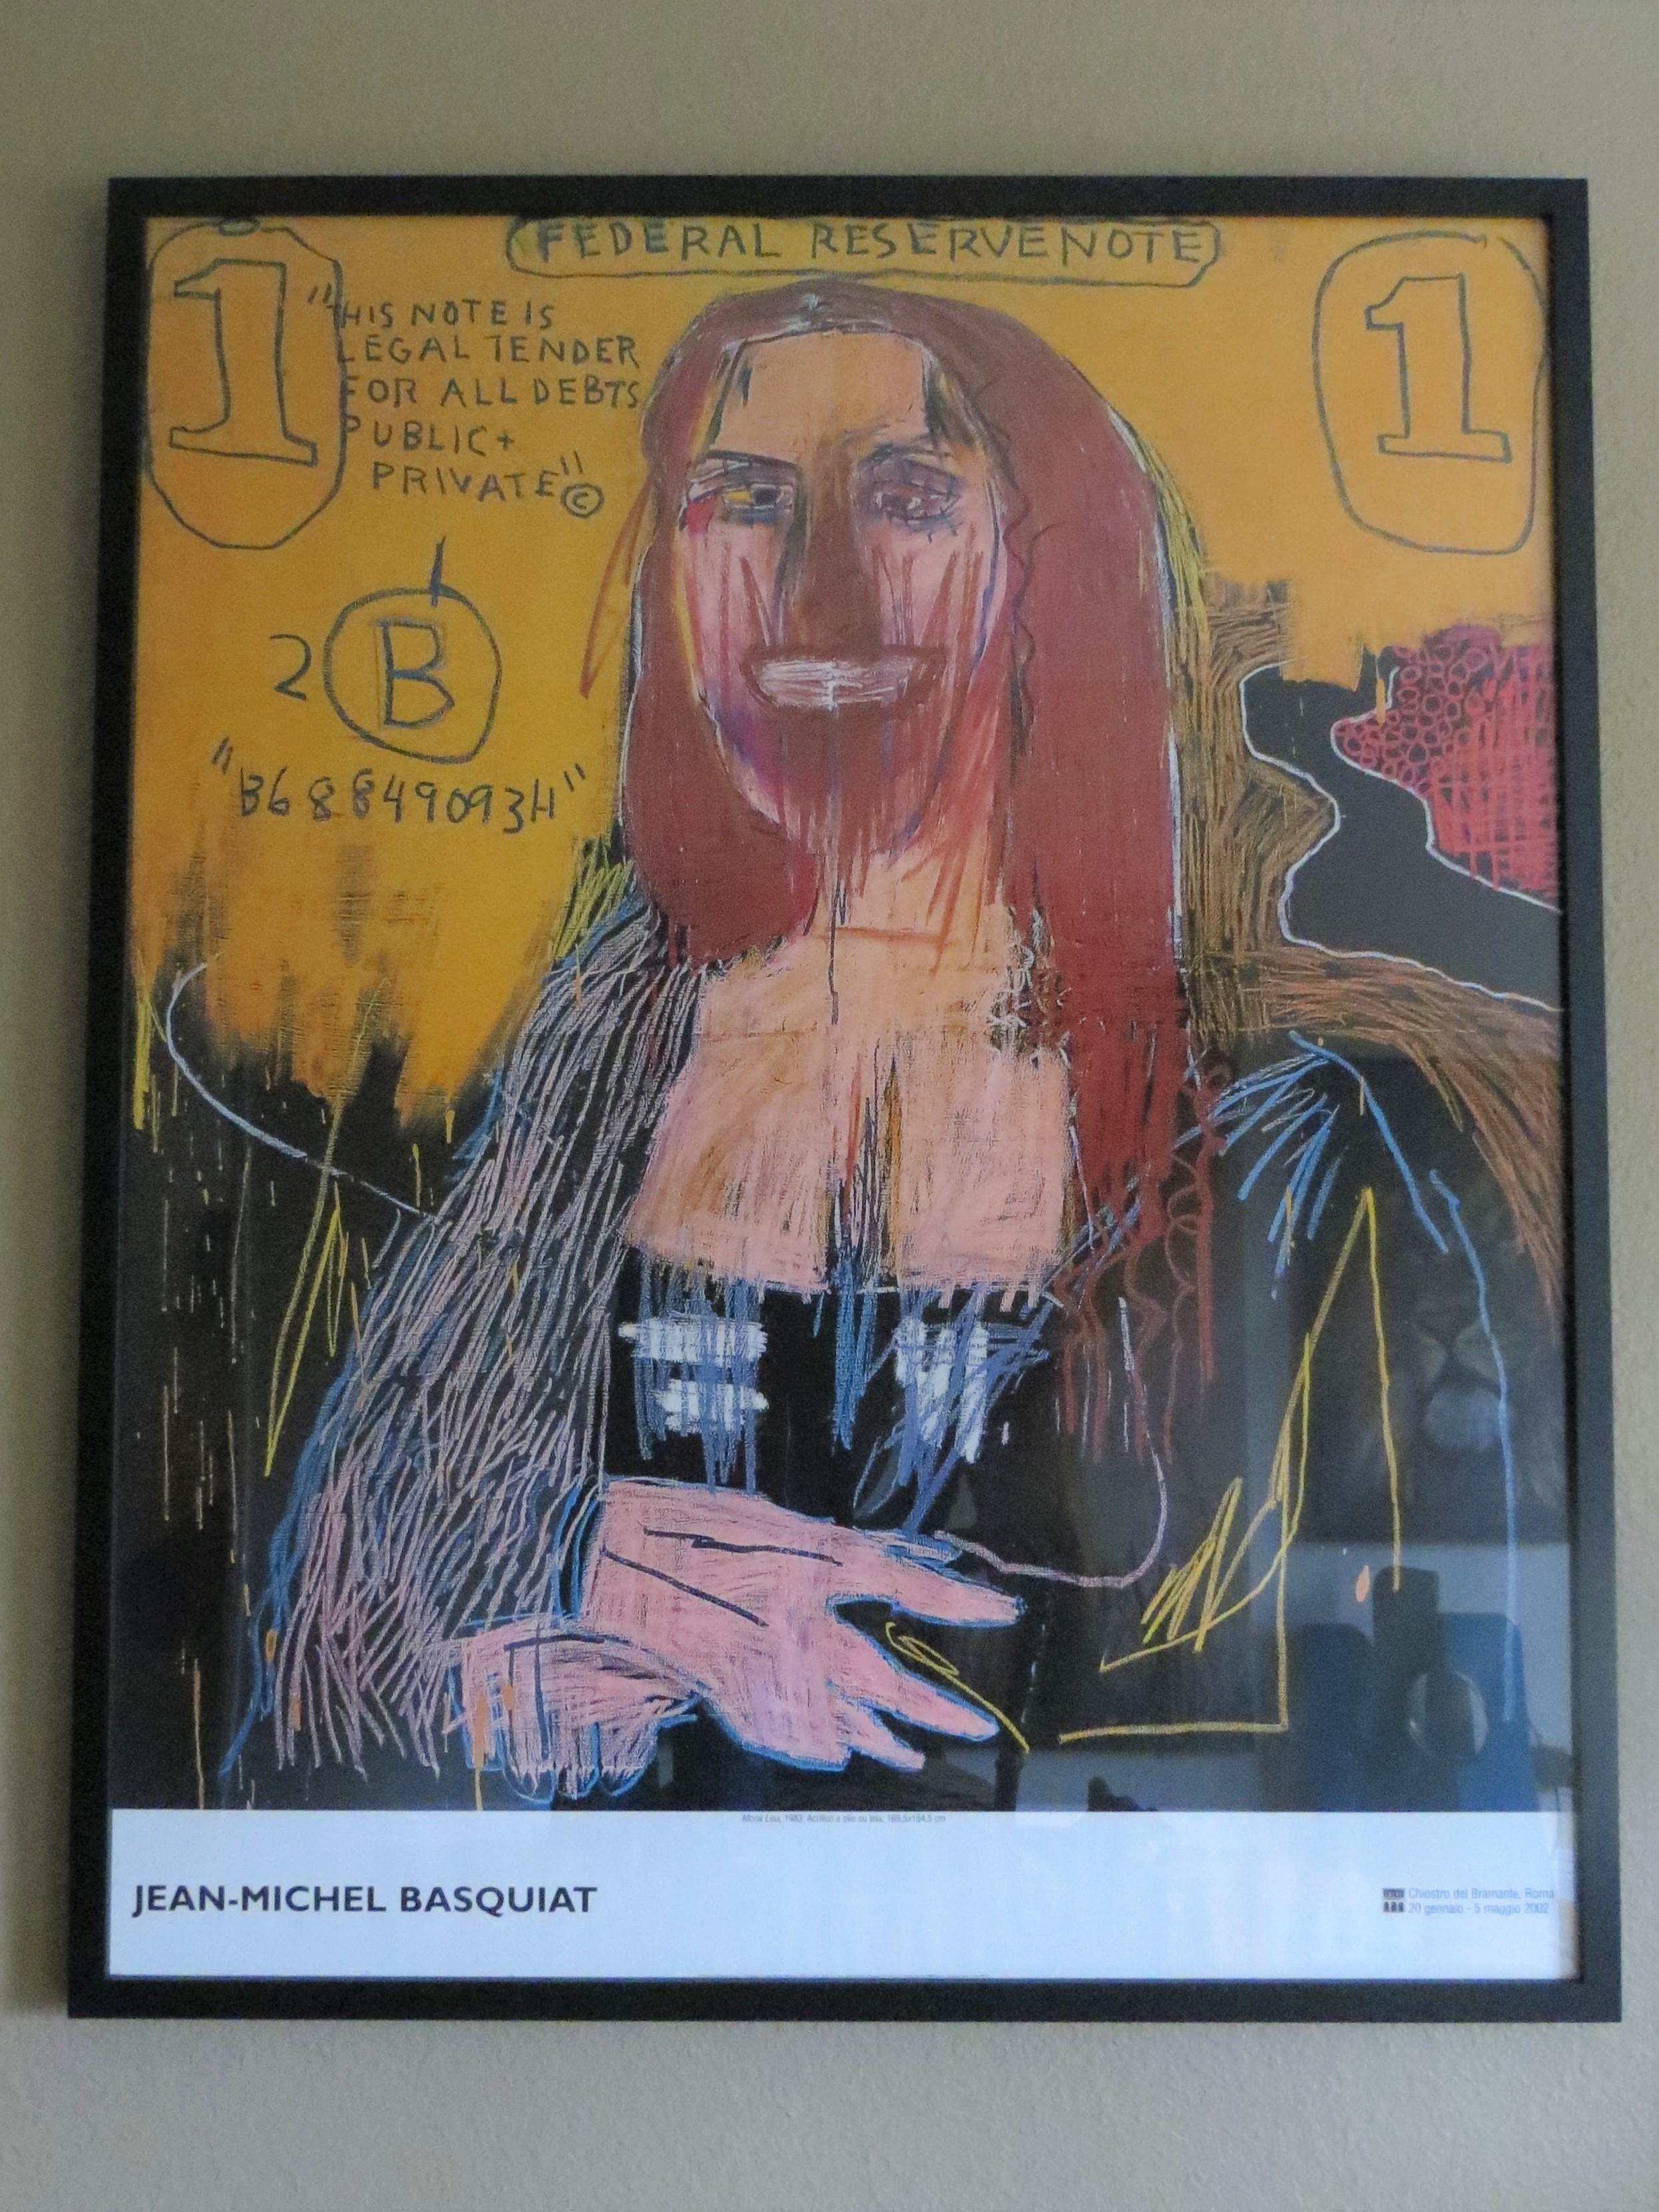  Jean-Michel Basquiat Mona Lisa Exhibition Poster - Print by after Jean-Michel Basquiat